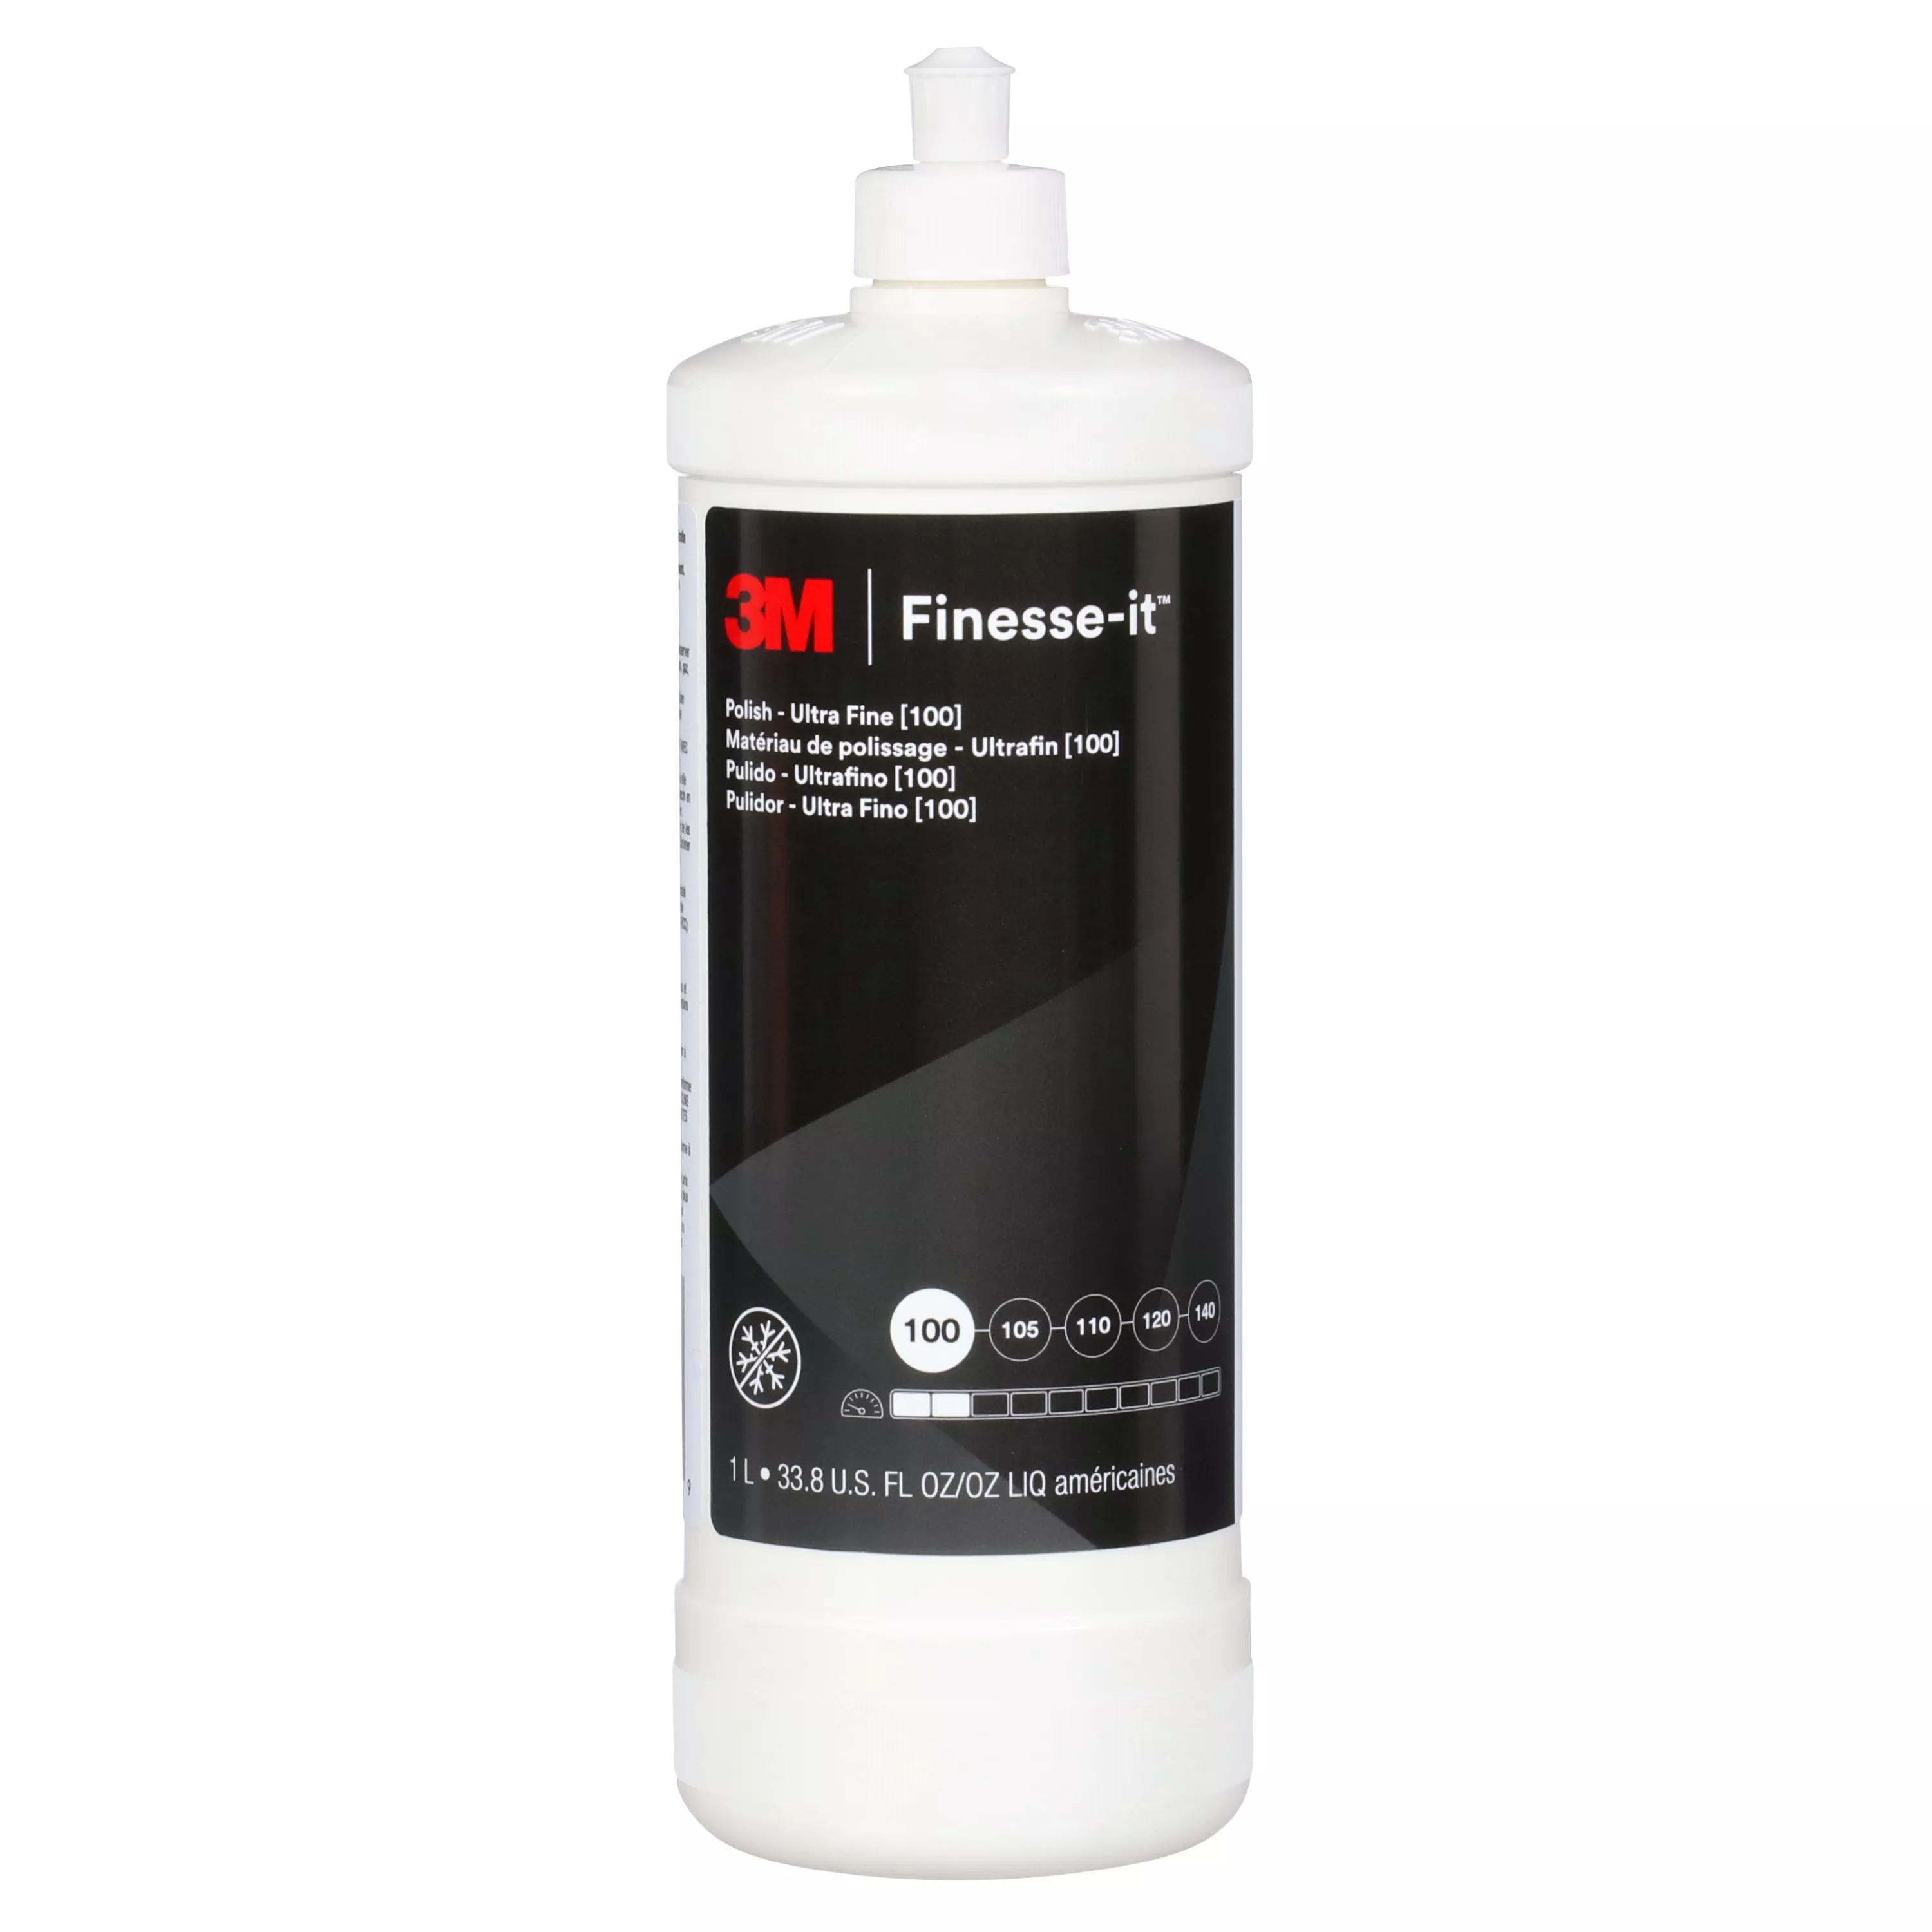 3M™ Finesse-it™ Polish Standard Series, 28696, Ultra Fine (100), White, 1 Liter (33.814 oz), 12 ea/Case